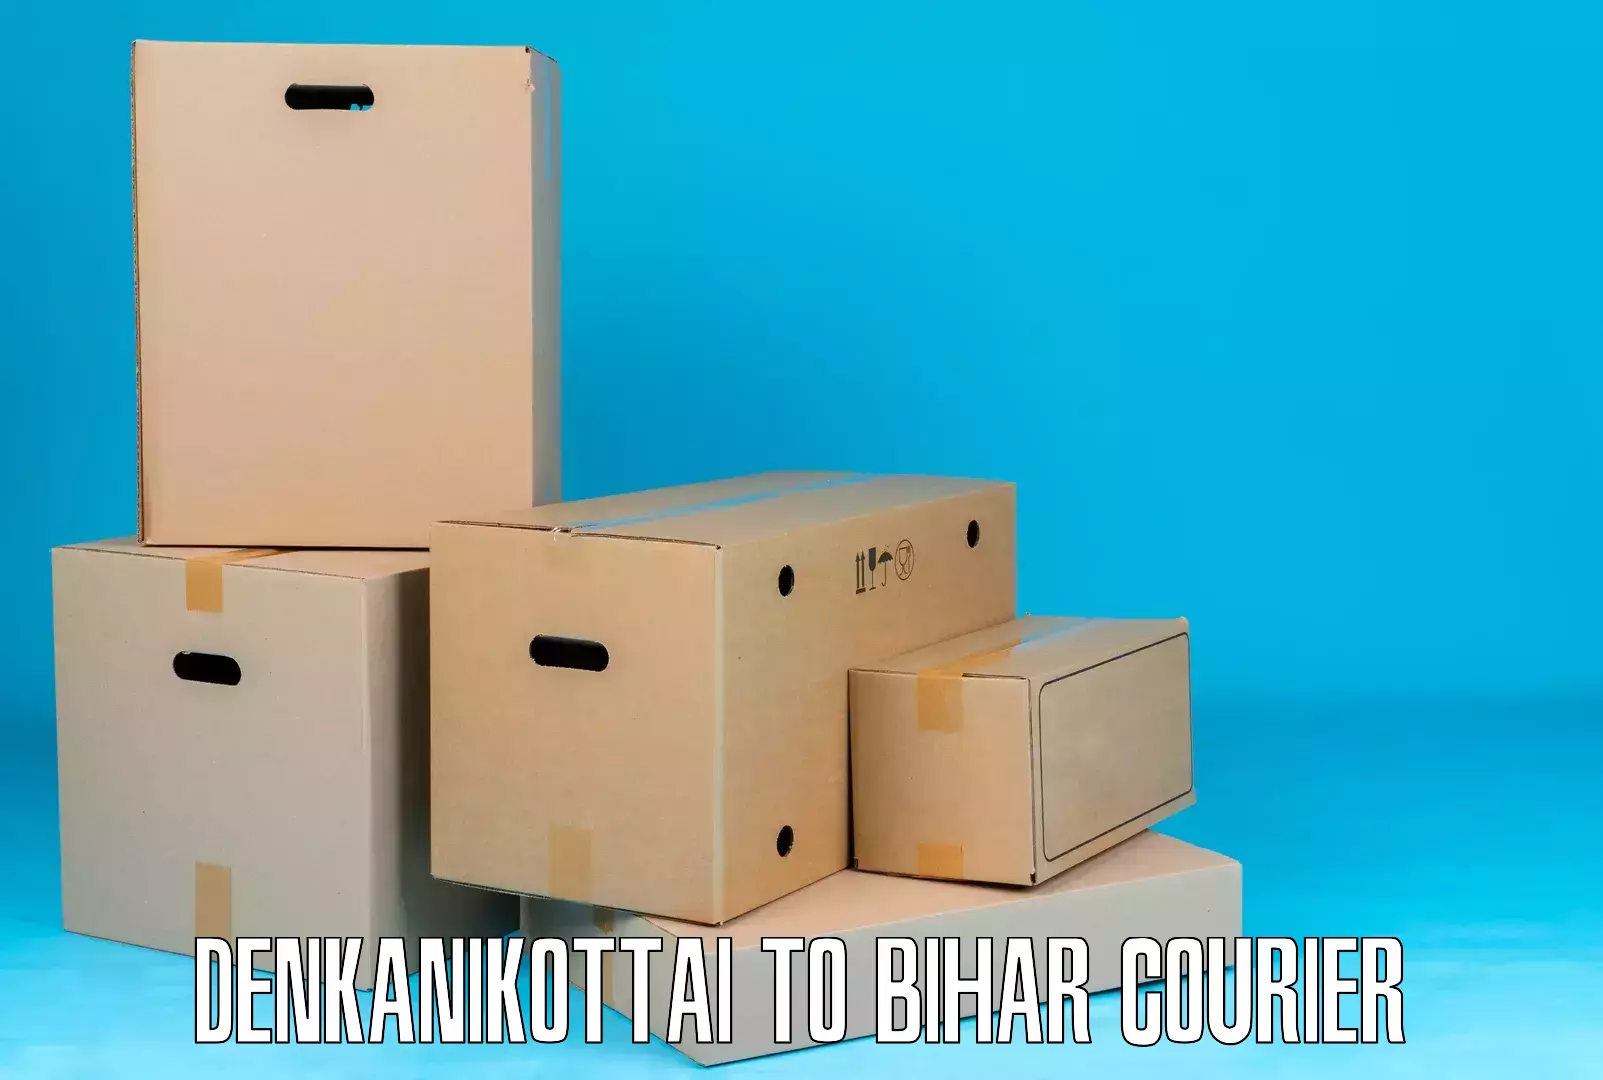 International courier rates Denkanikottai to Bihar